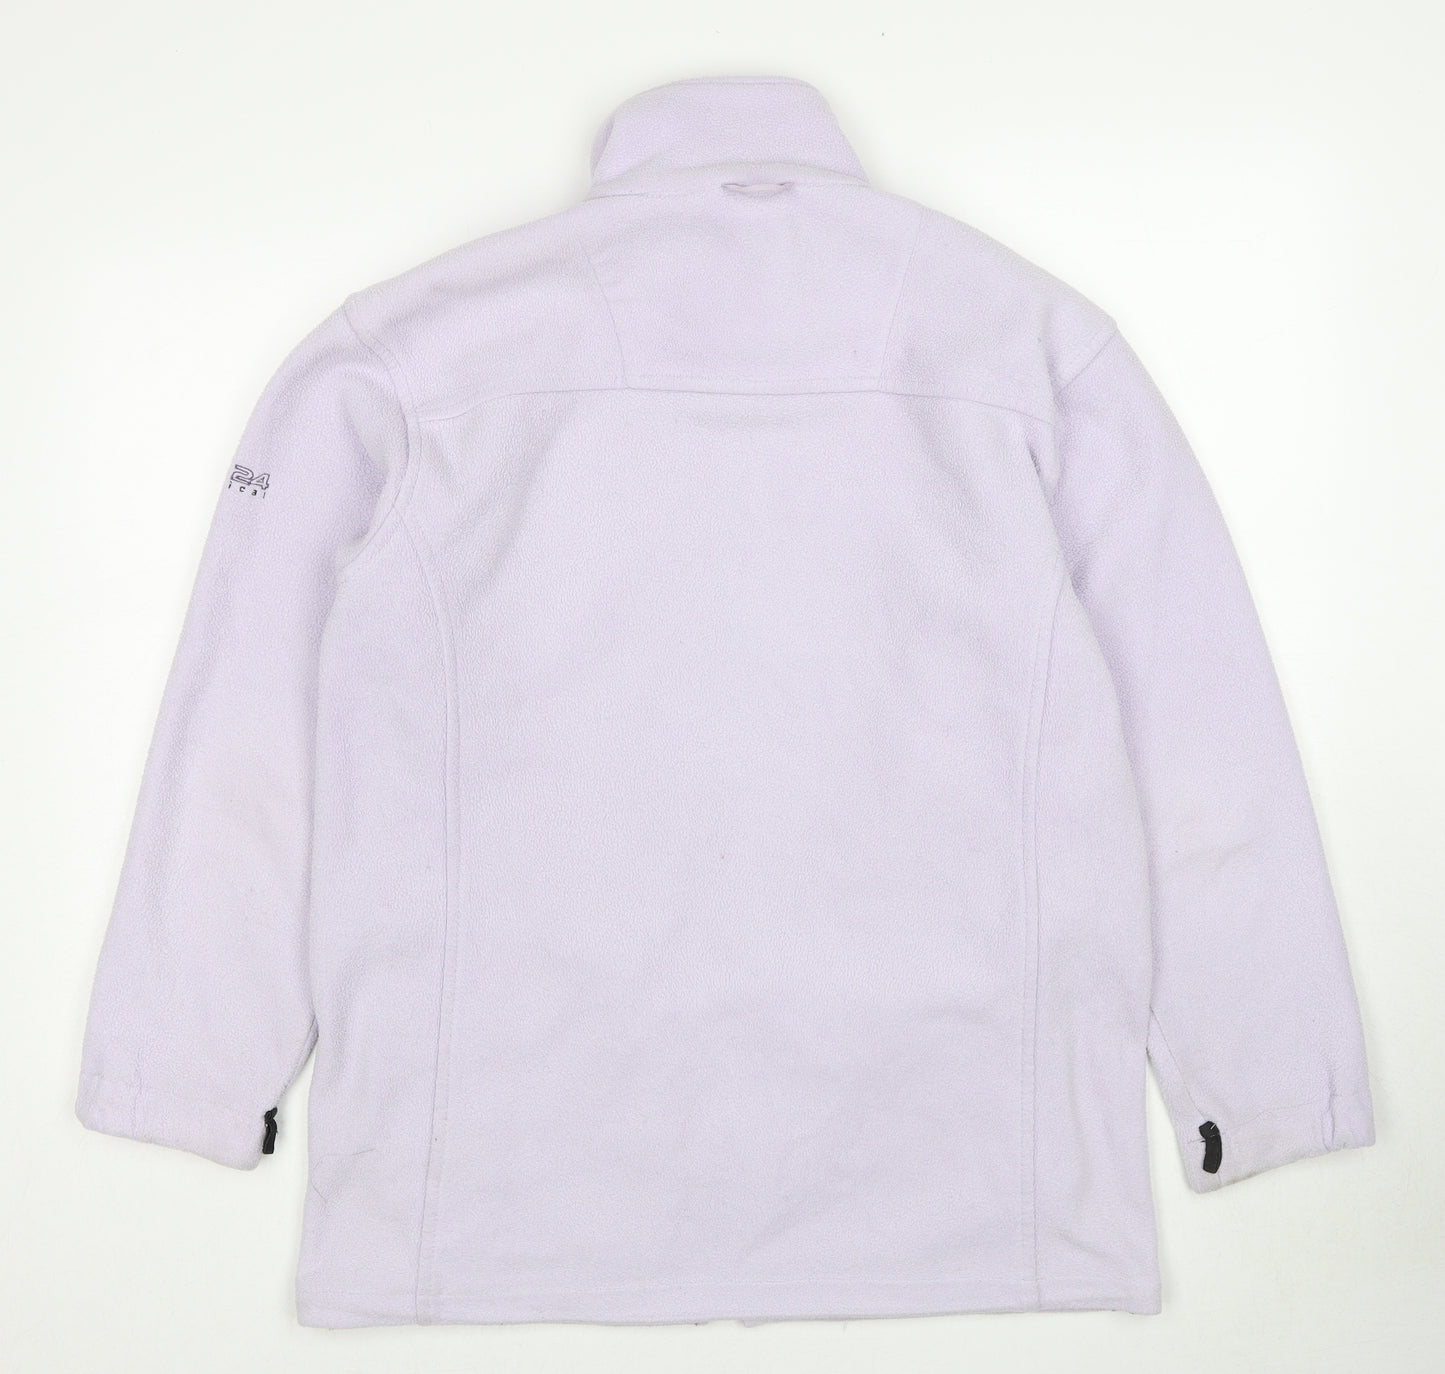 TOG24 Womens Purple Jacket Size 12 Zip